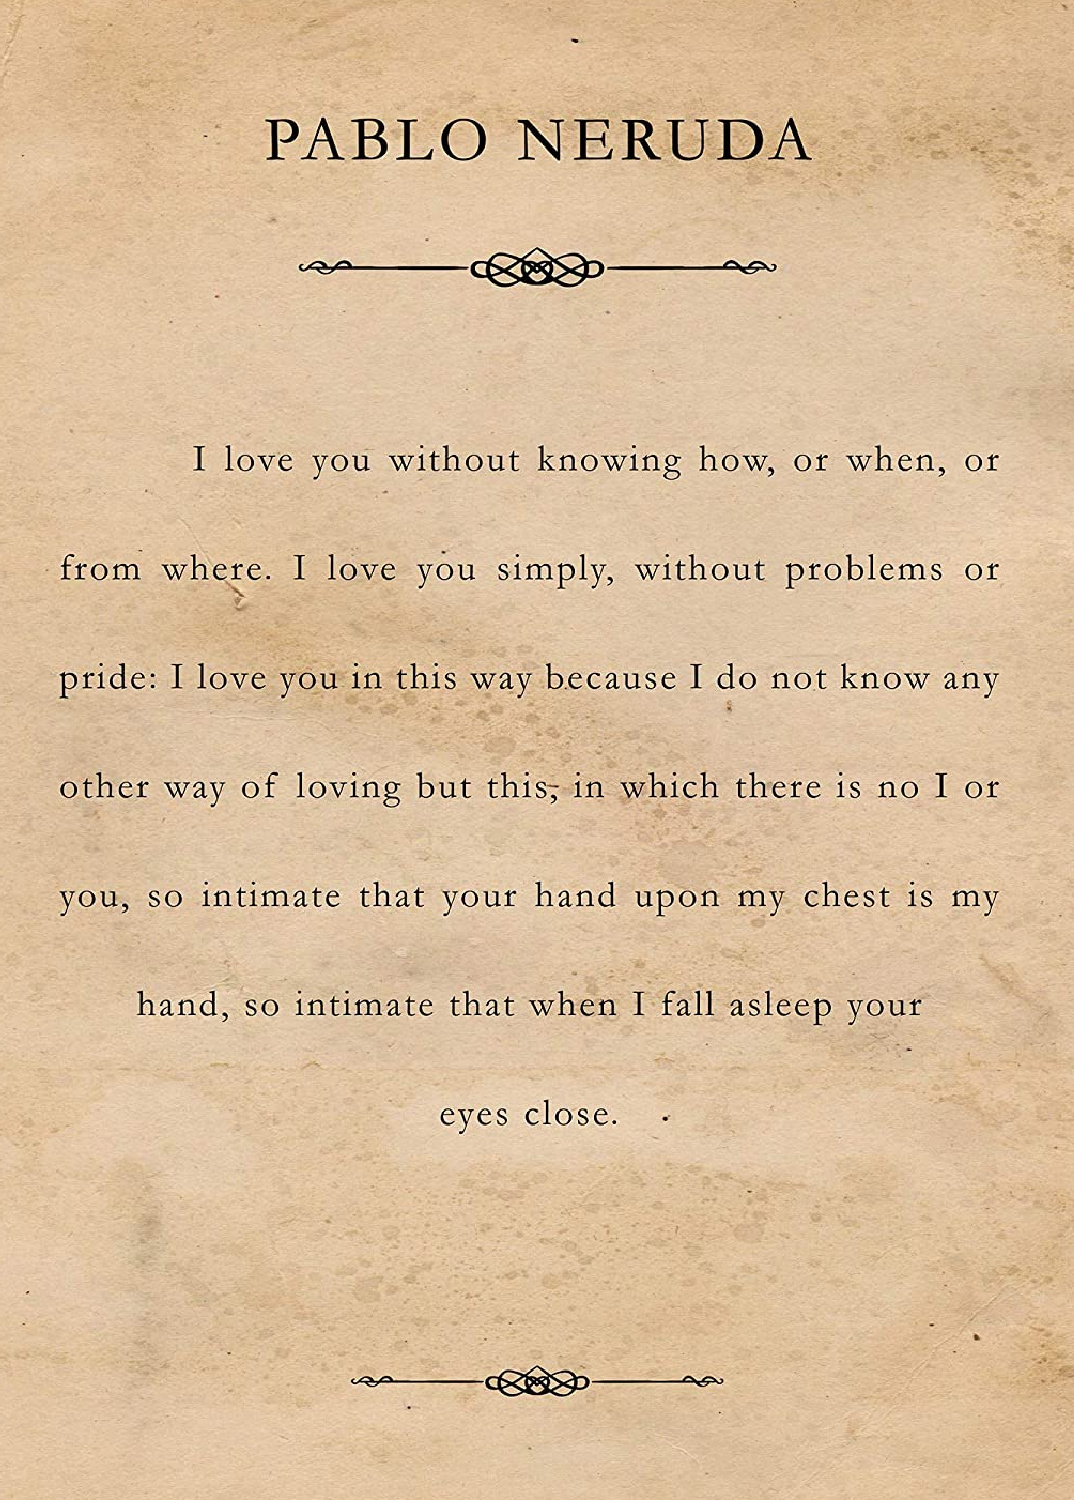 Pablo Neruda Sonnet about love. #pabloeruda #lovepoems